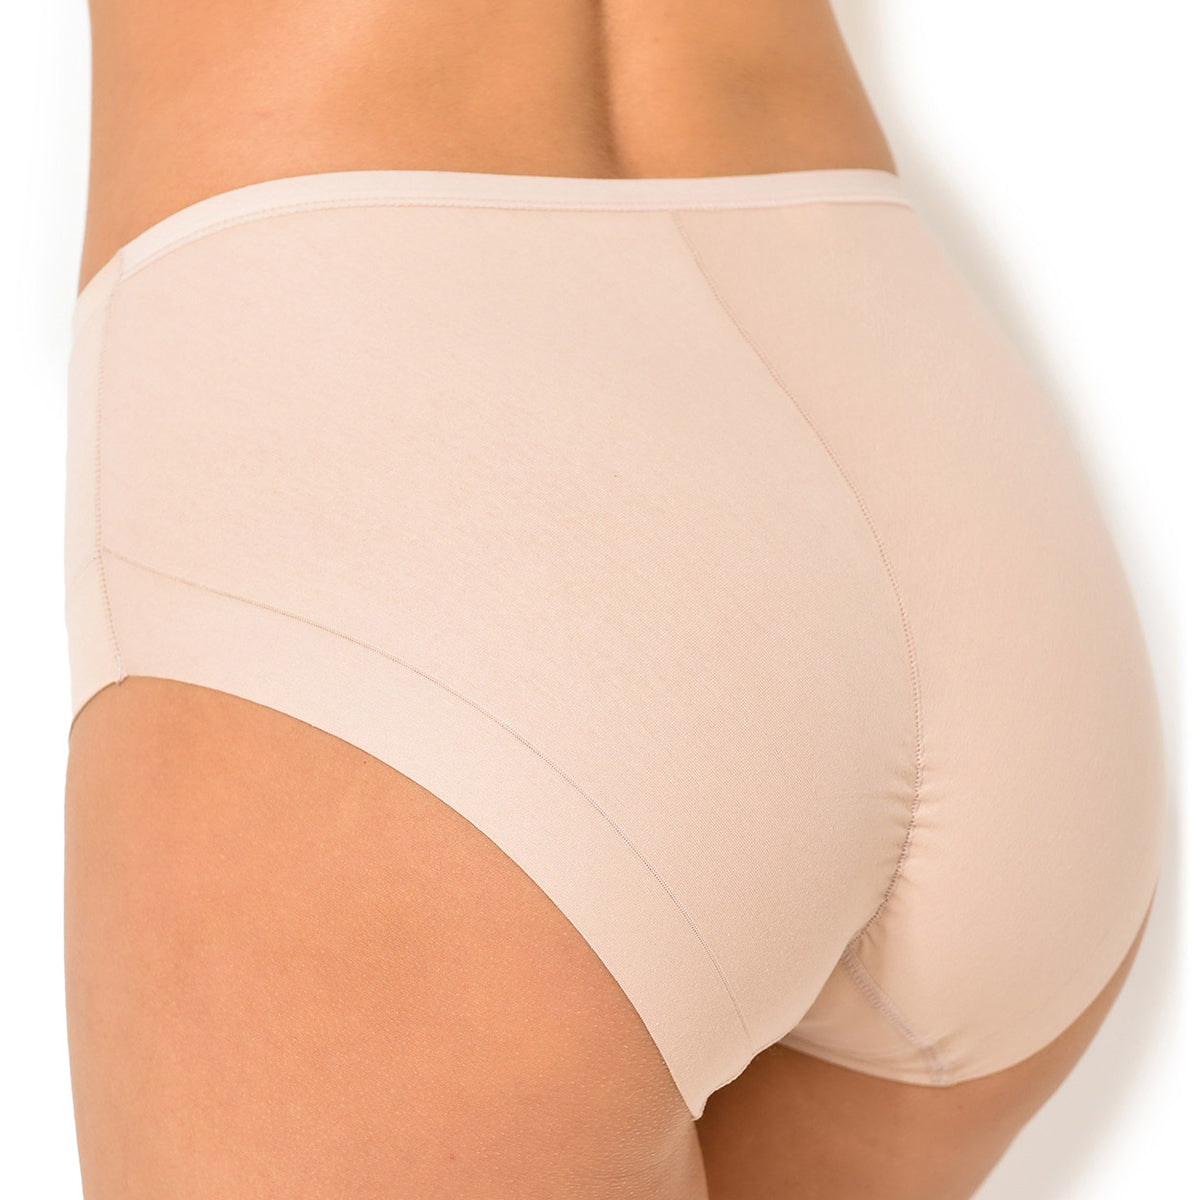 Janira cotton band brief in dune nude beige panty lingerie canada linea intima